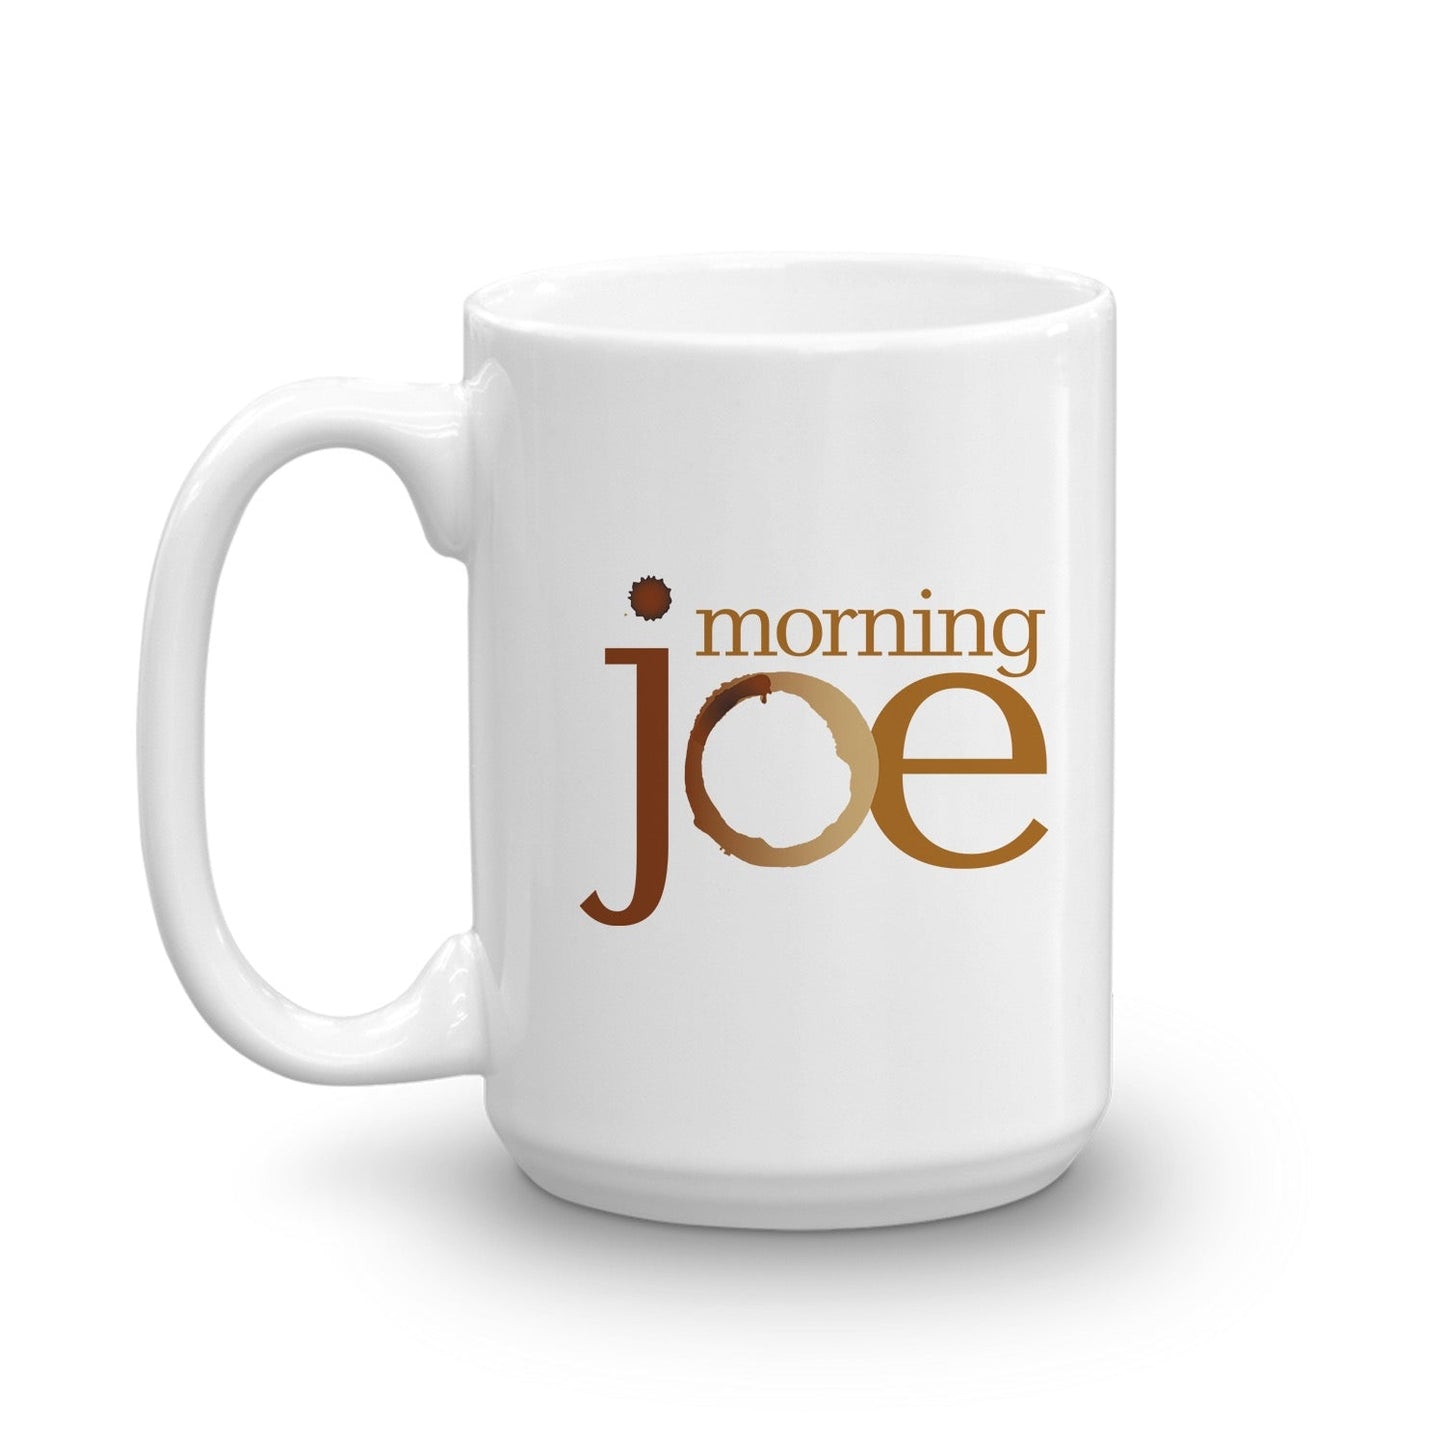 Official Morning Joe 15 oz Ceramic White Mug